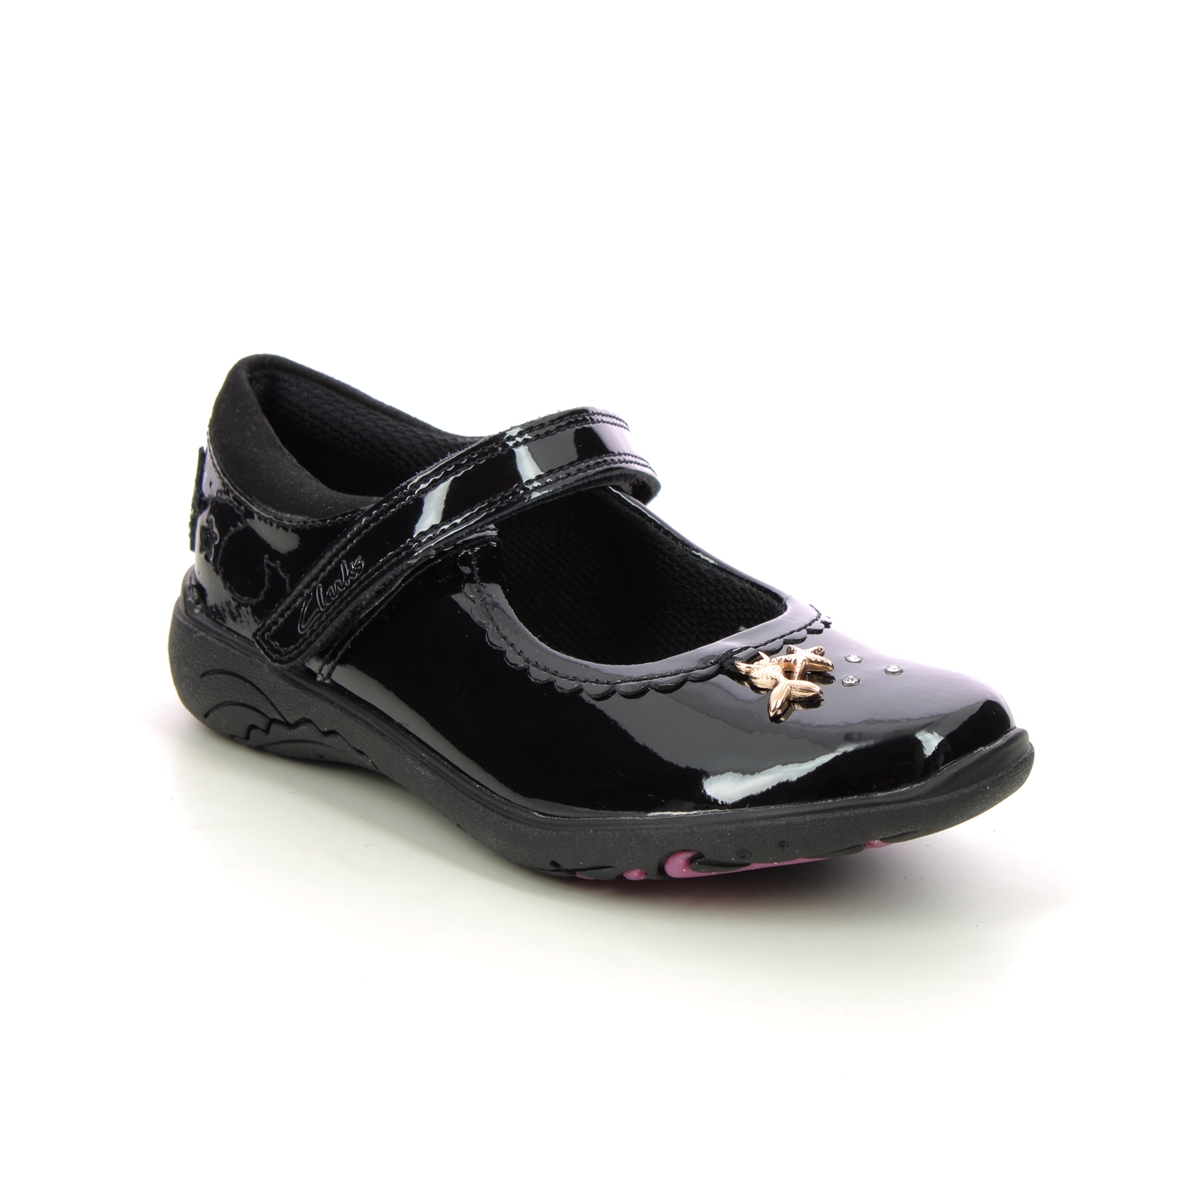 Clarks Relda Sea K Mary Jane Black Patent Kids Girls School Shoes 722417G In Size 9 In Plain Black Patent G Width Fitting For School For kids